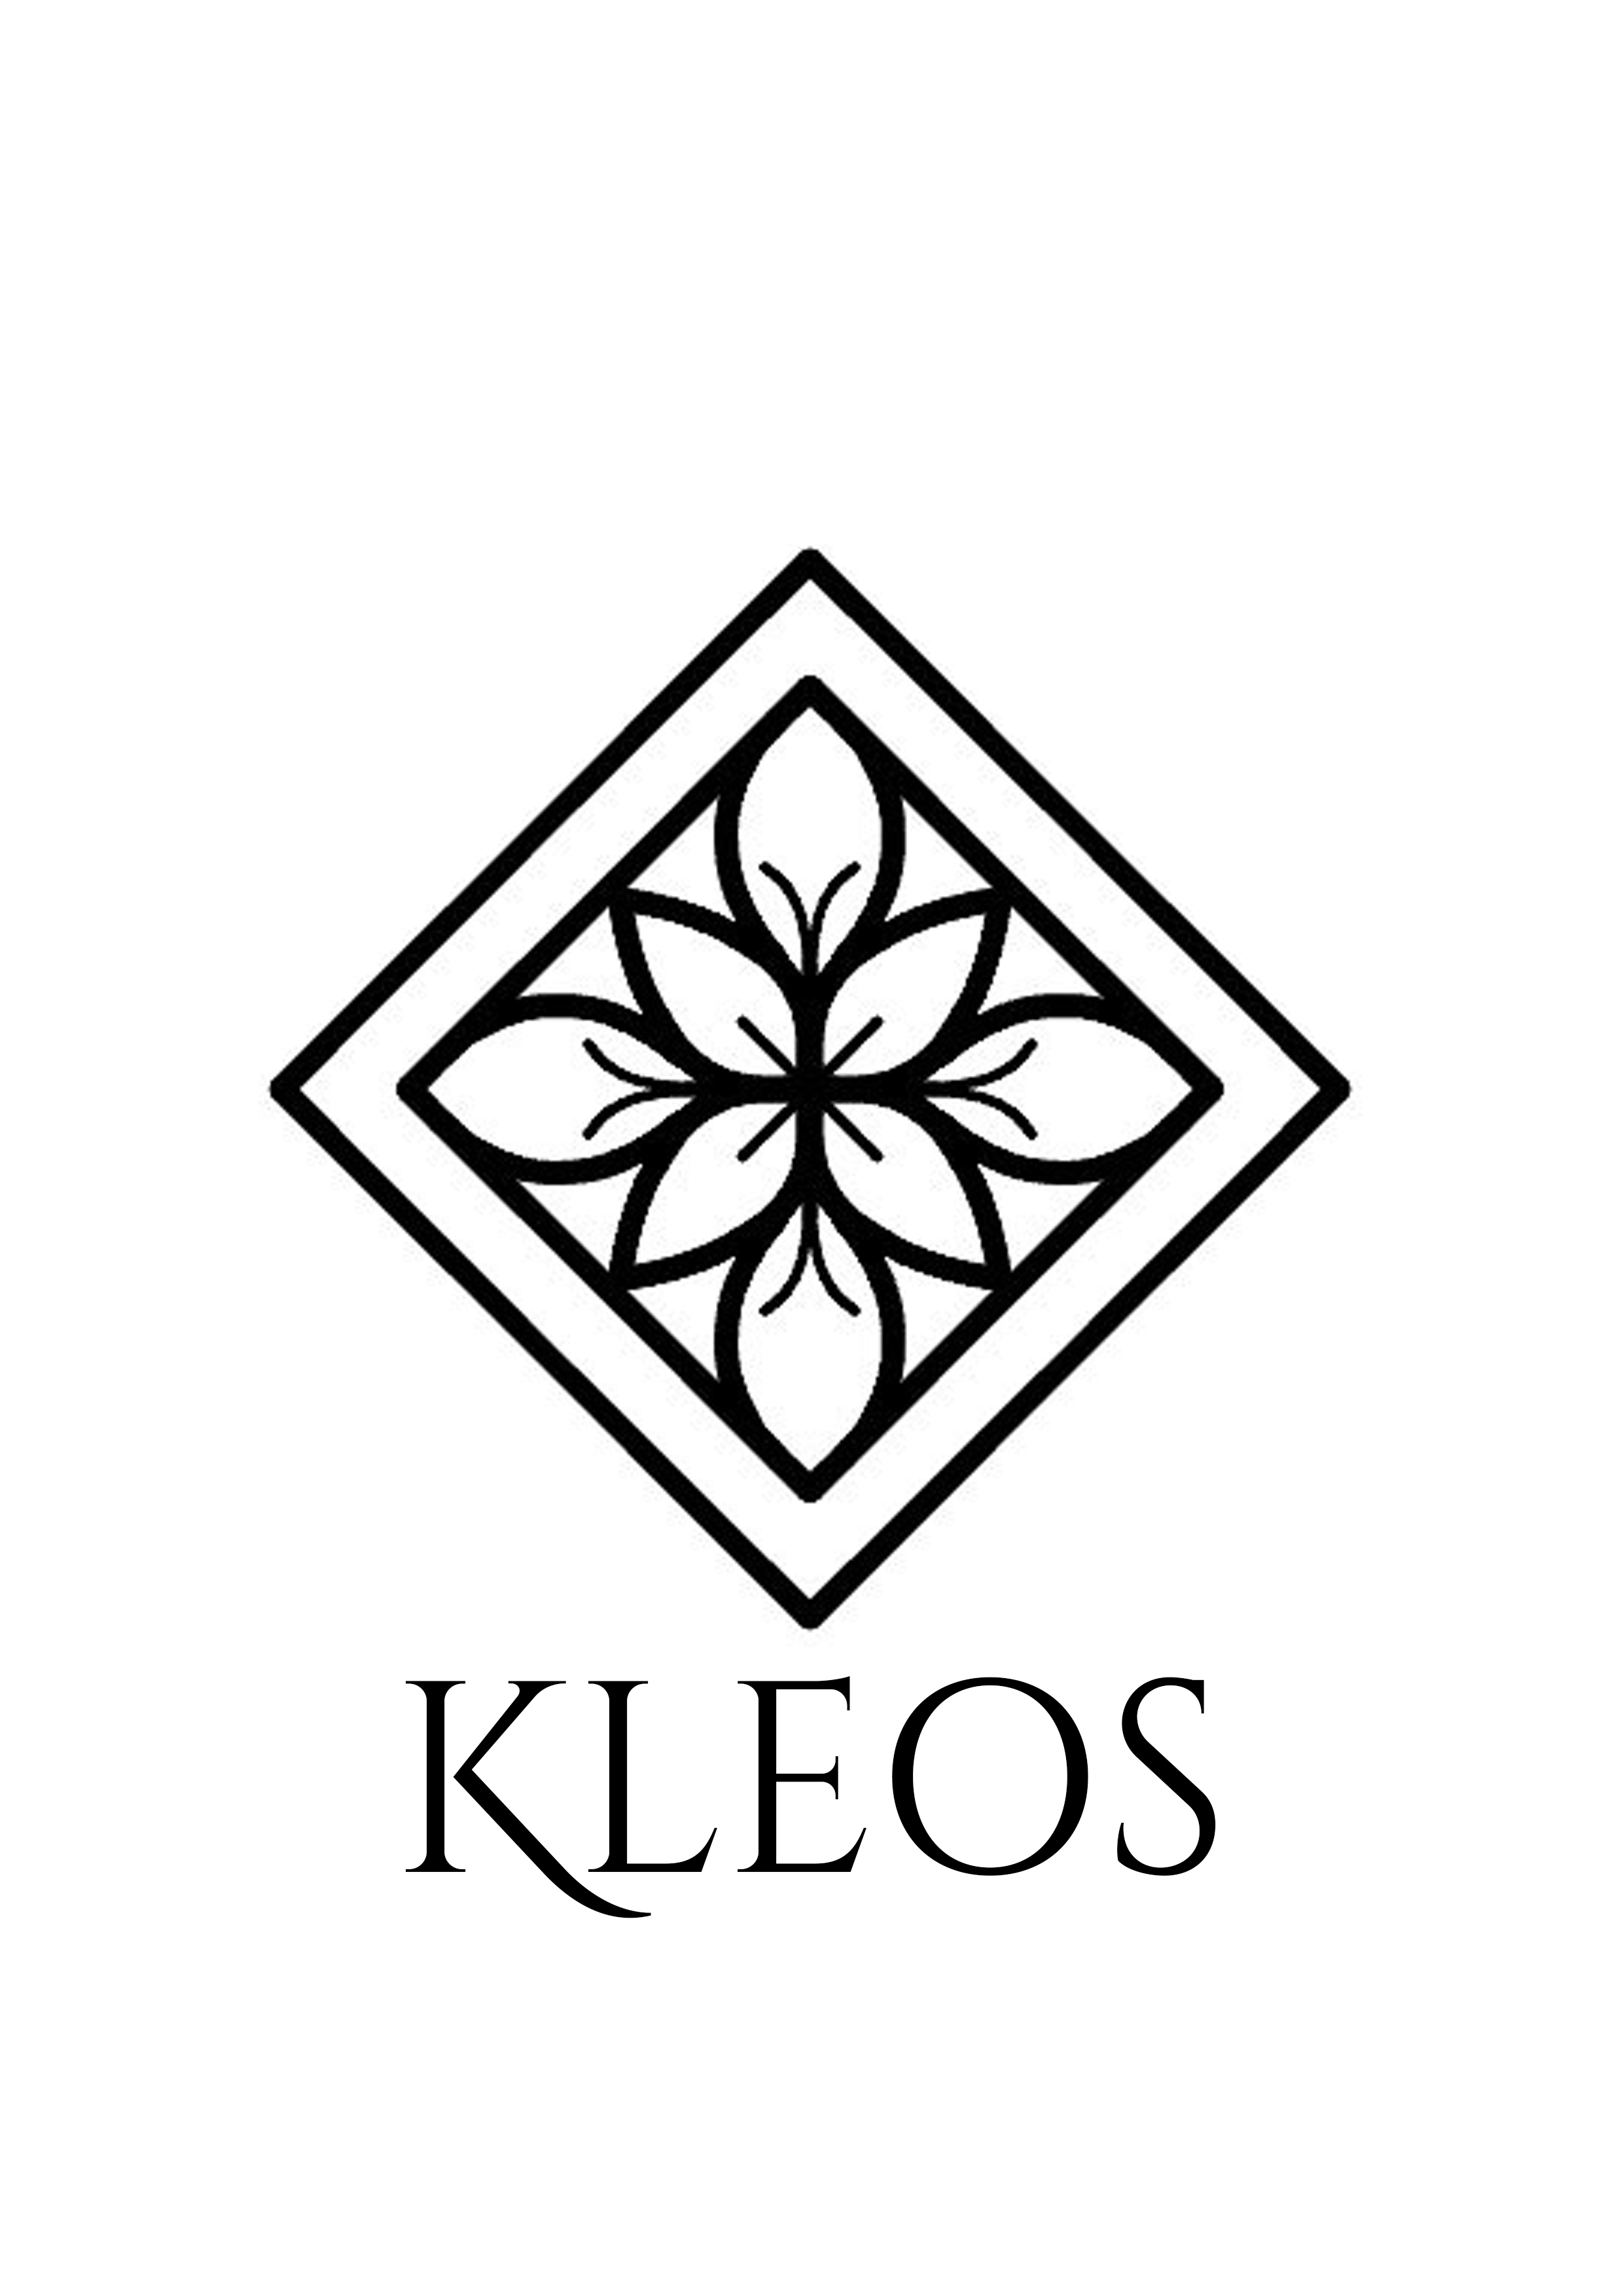 KLEOS handmade chefknives and ästhetik steaknives